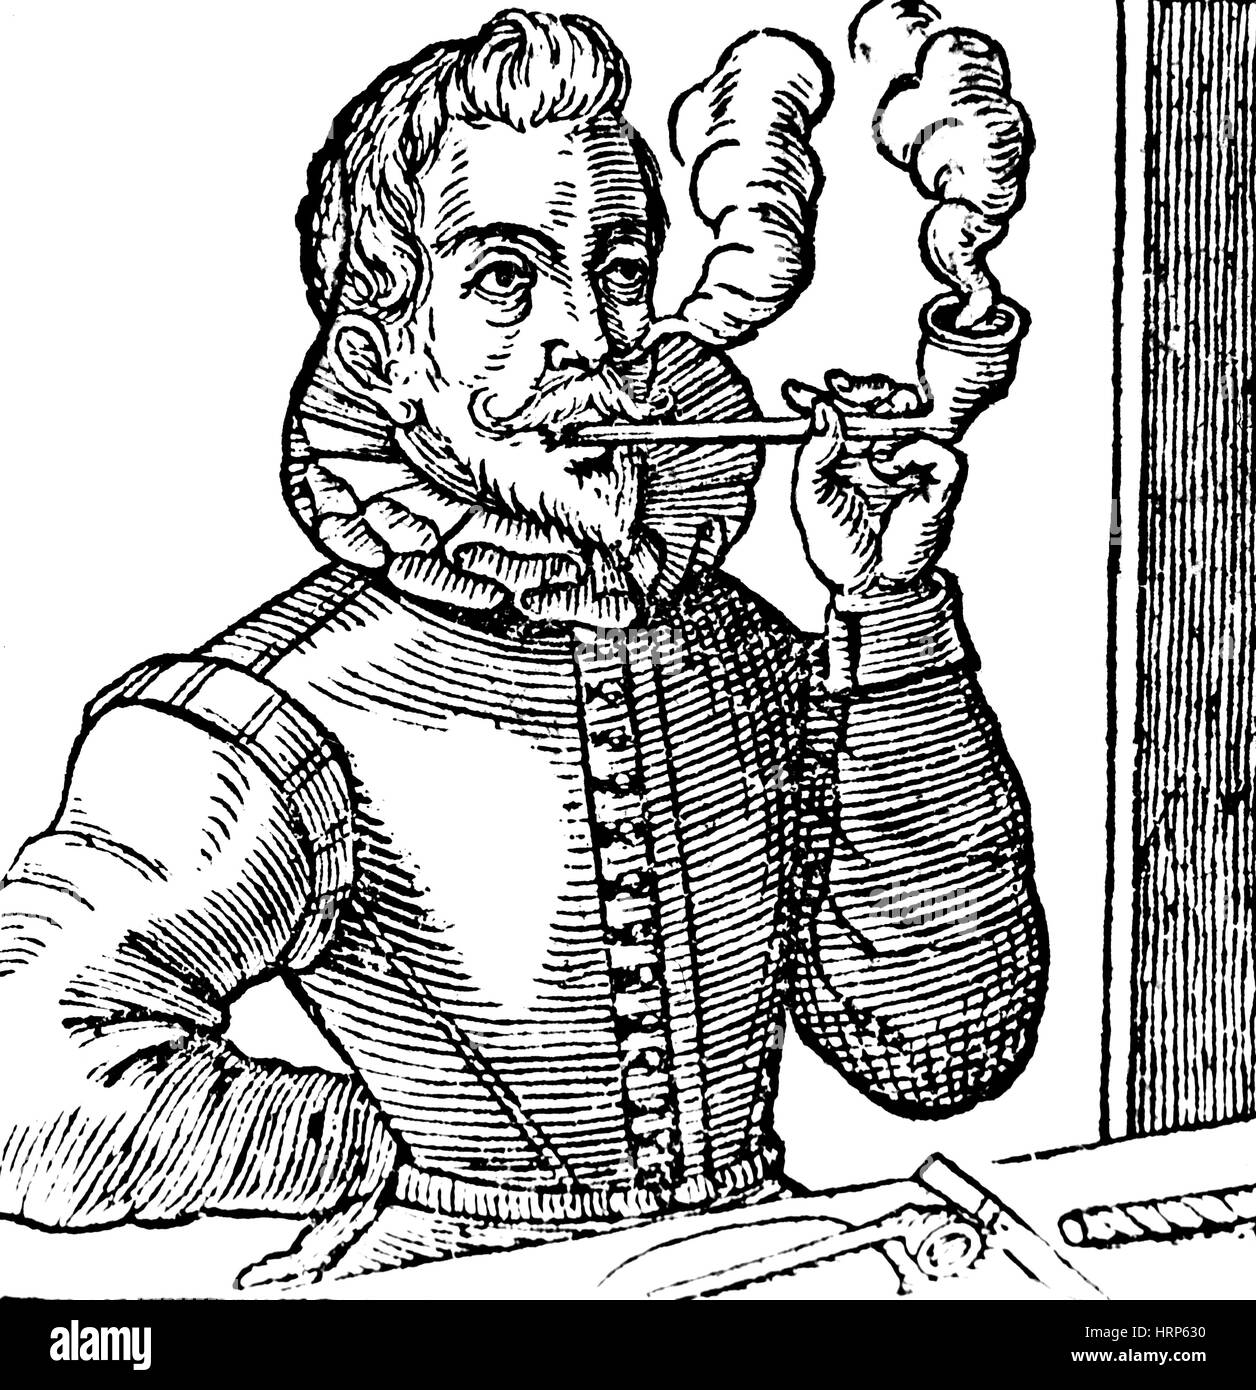 First Known Image of Man Smoking, 1595 Stock Photo